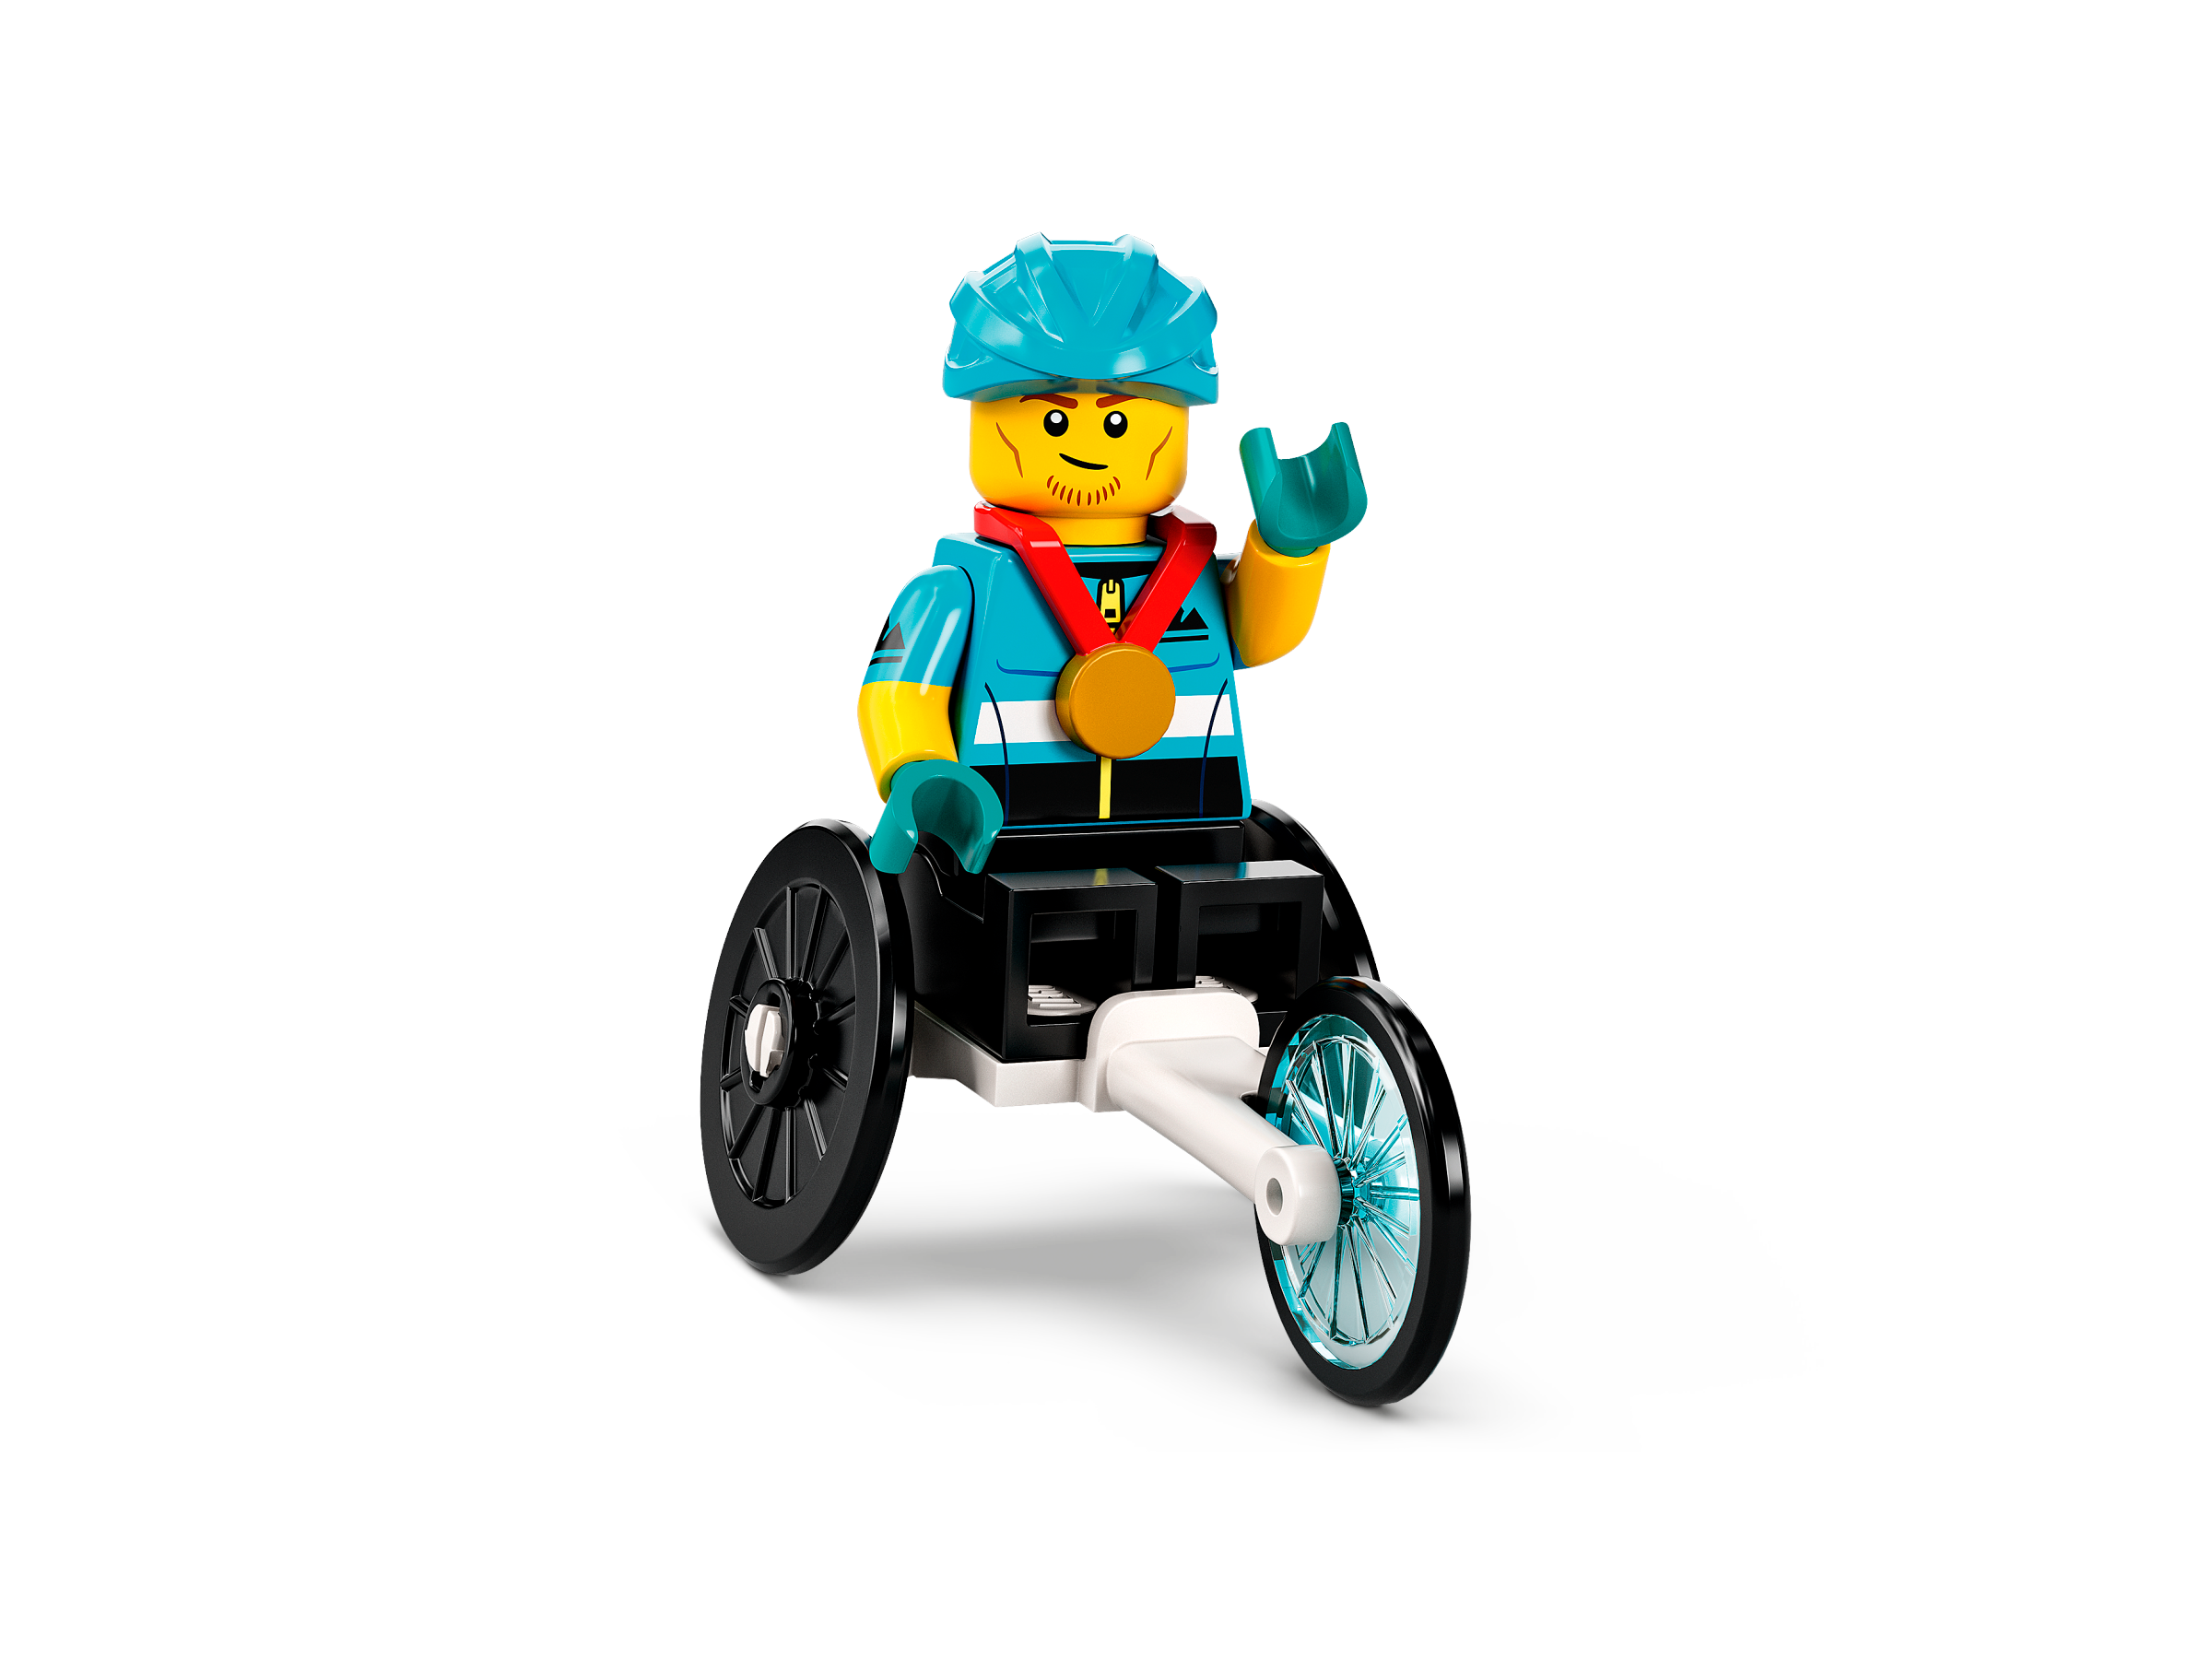 LEGO 71032 Minifigures Serie 22 Komplettsatz mit allen 12 Figuren CMF Komplett 